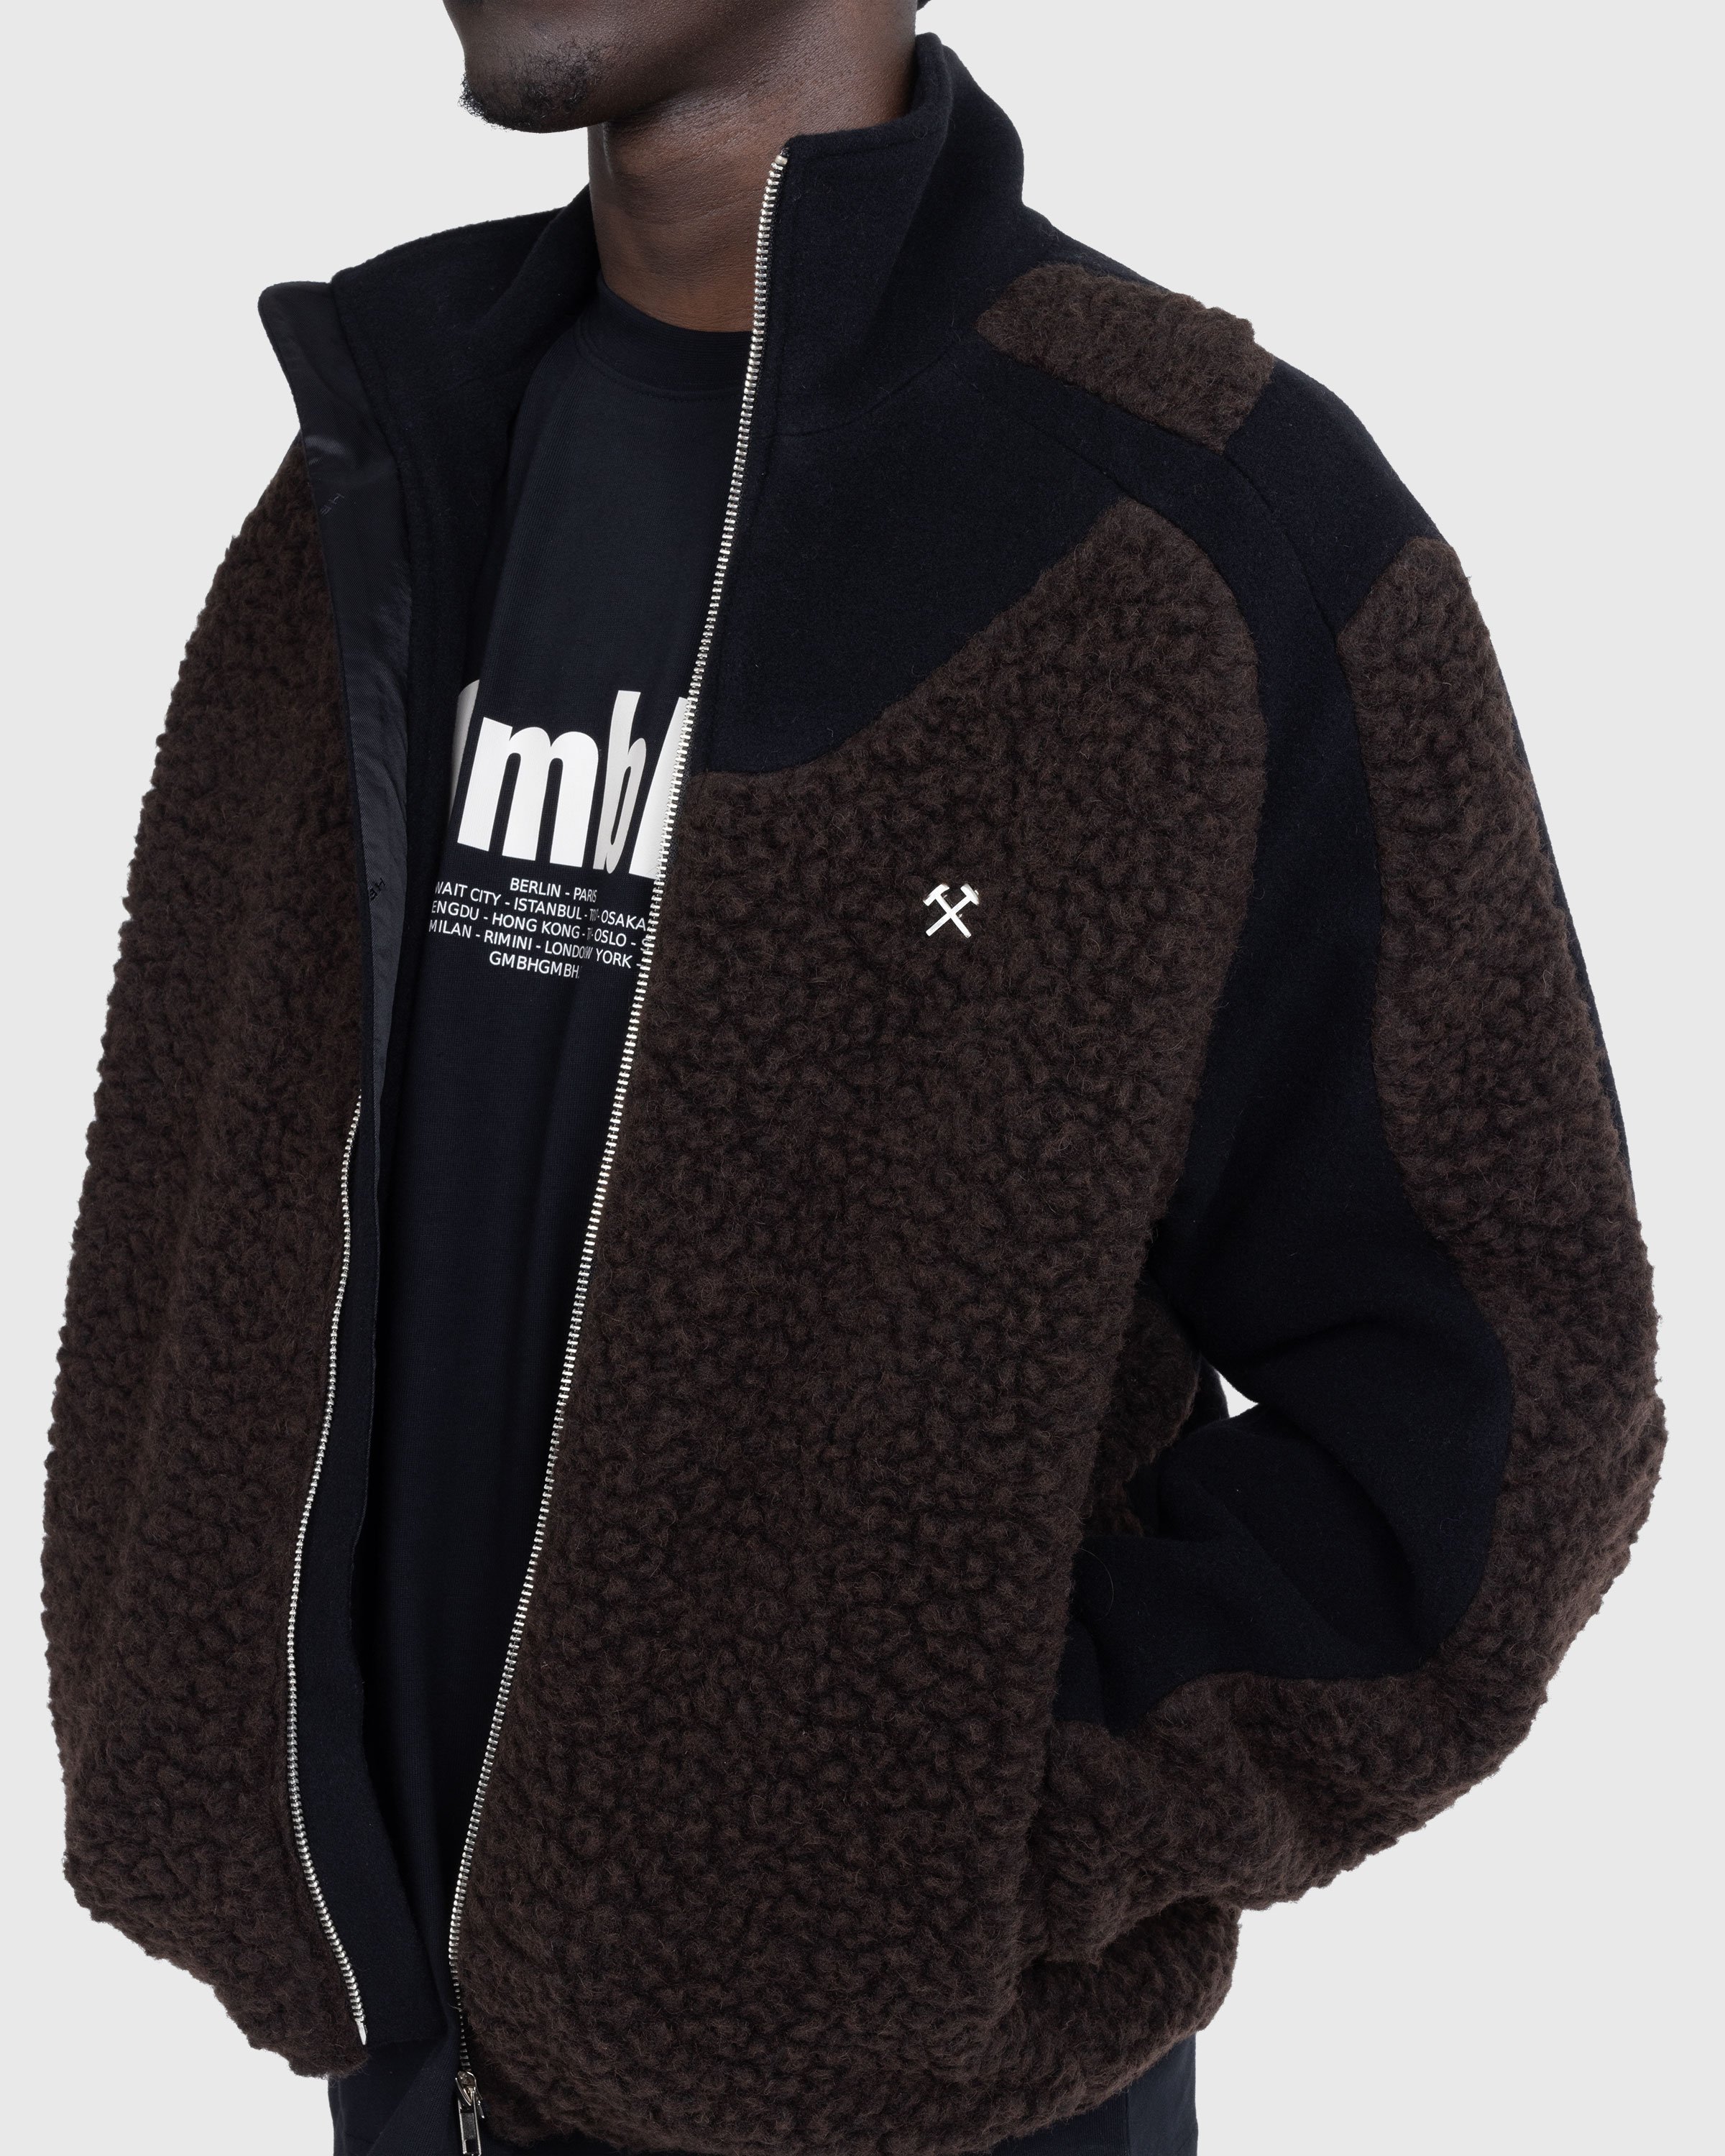 GmbH - Ercan Fleece Jacket Black/Brown - Clothing - Multi - Image 5